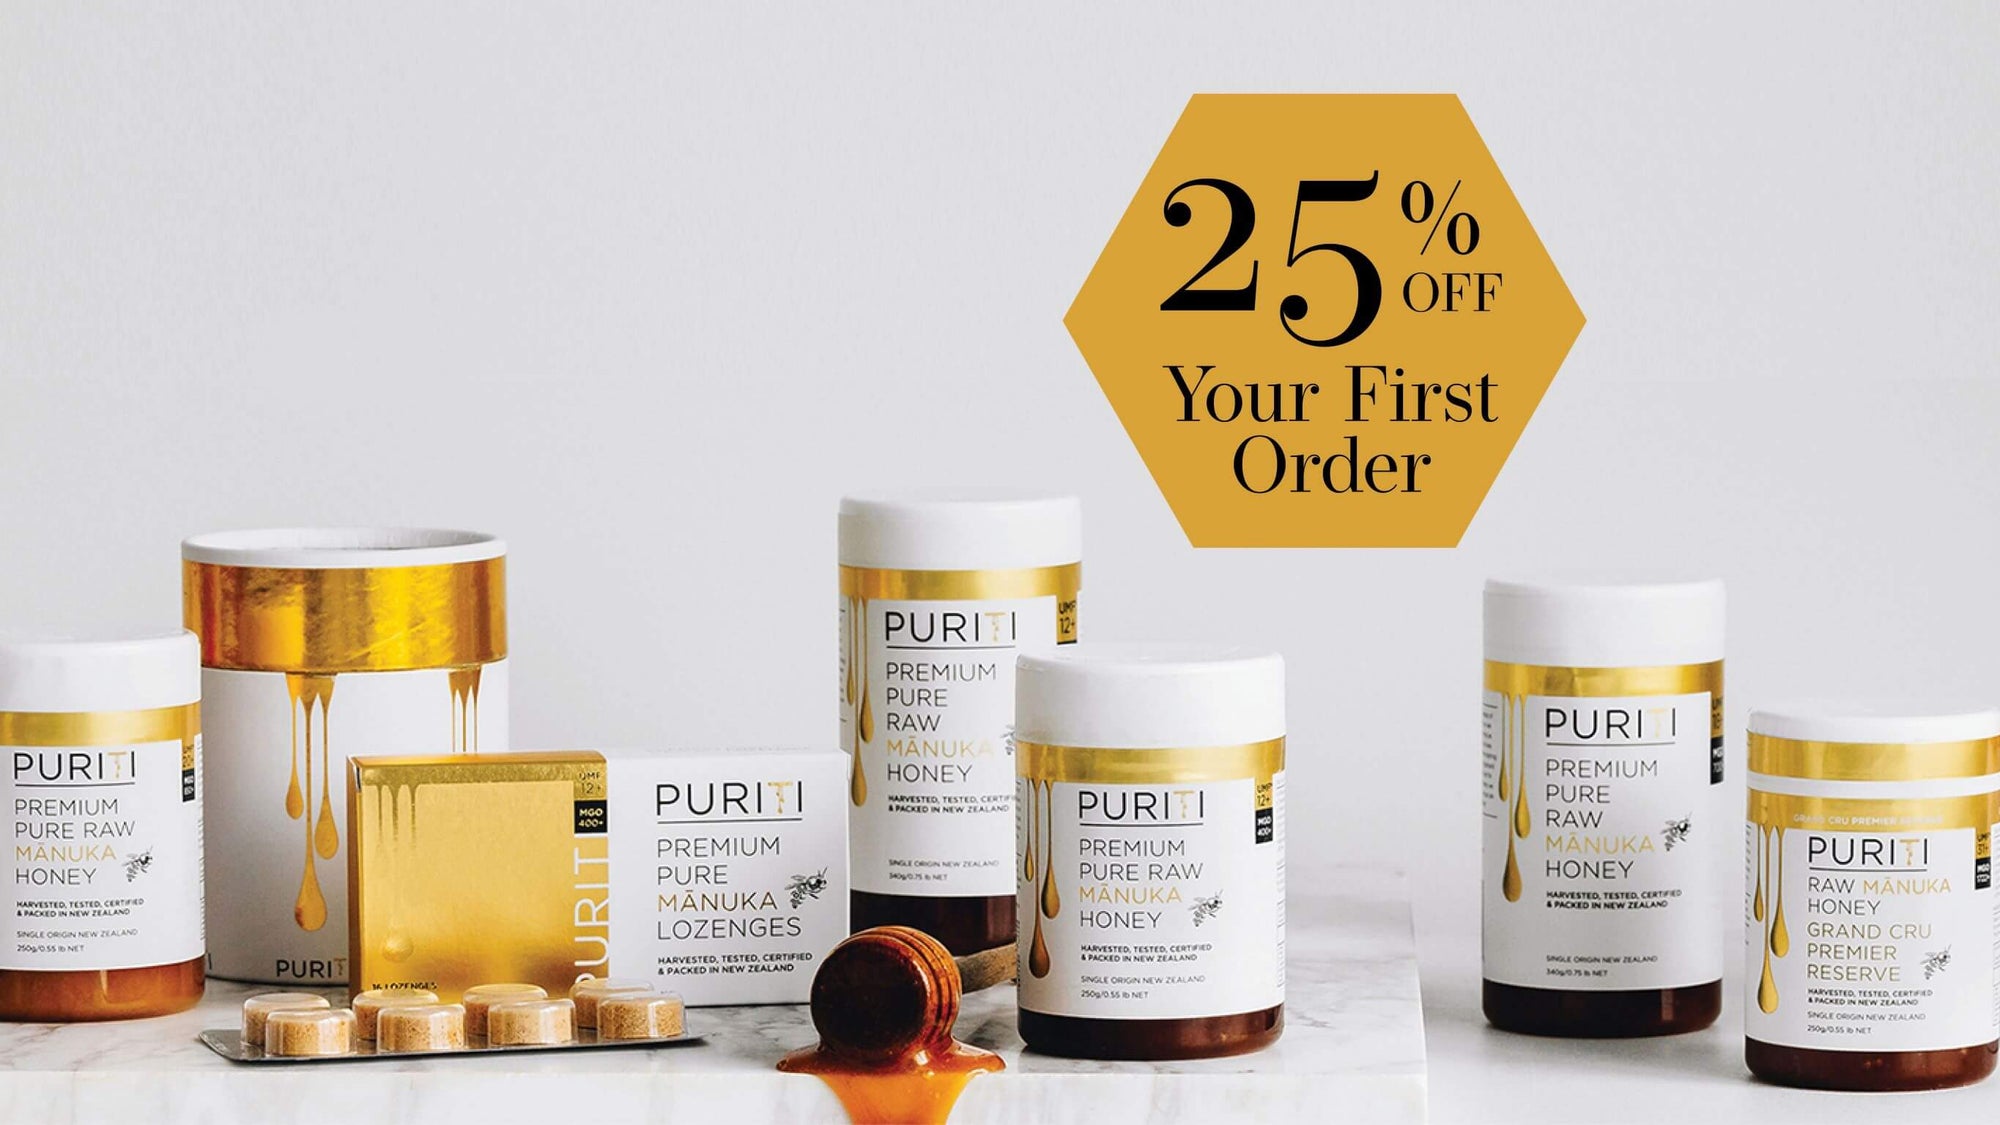 Puriti Genuine Manuka Honey Full Range - 25% Off Your First Order